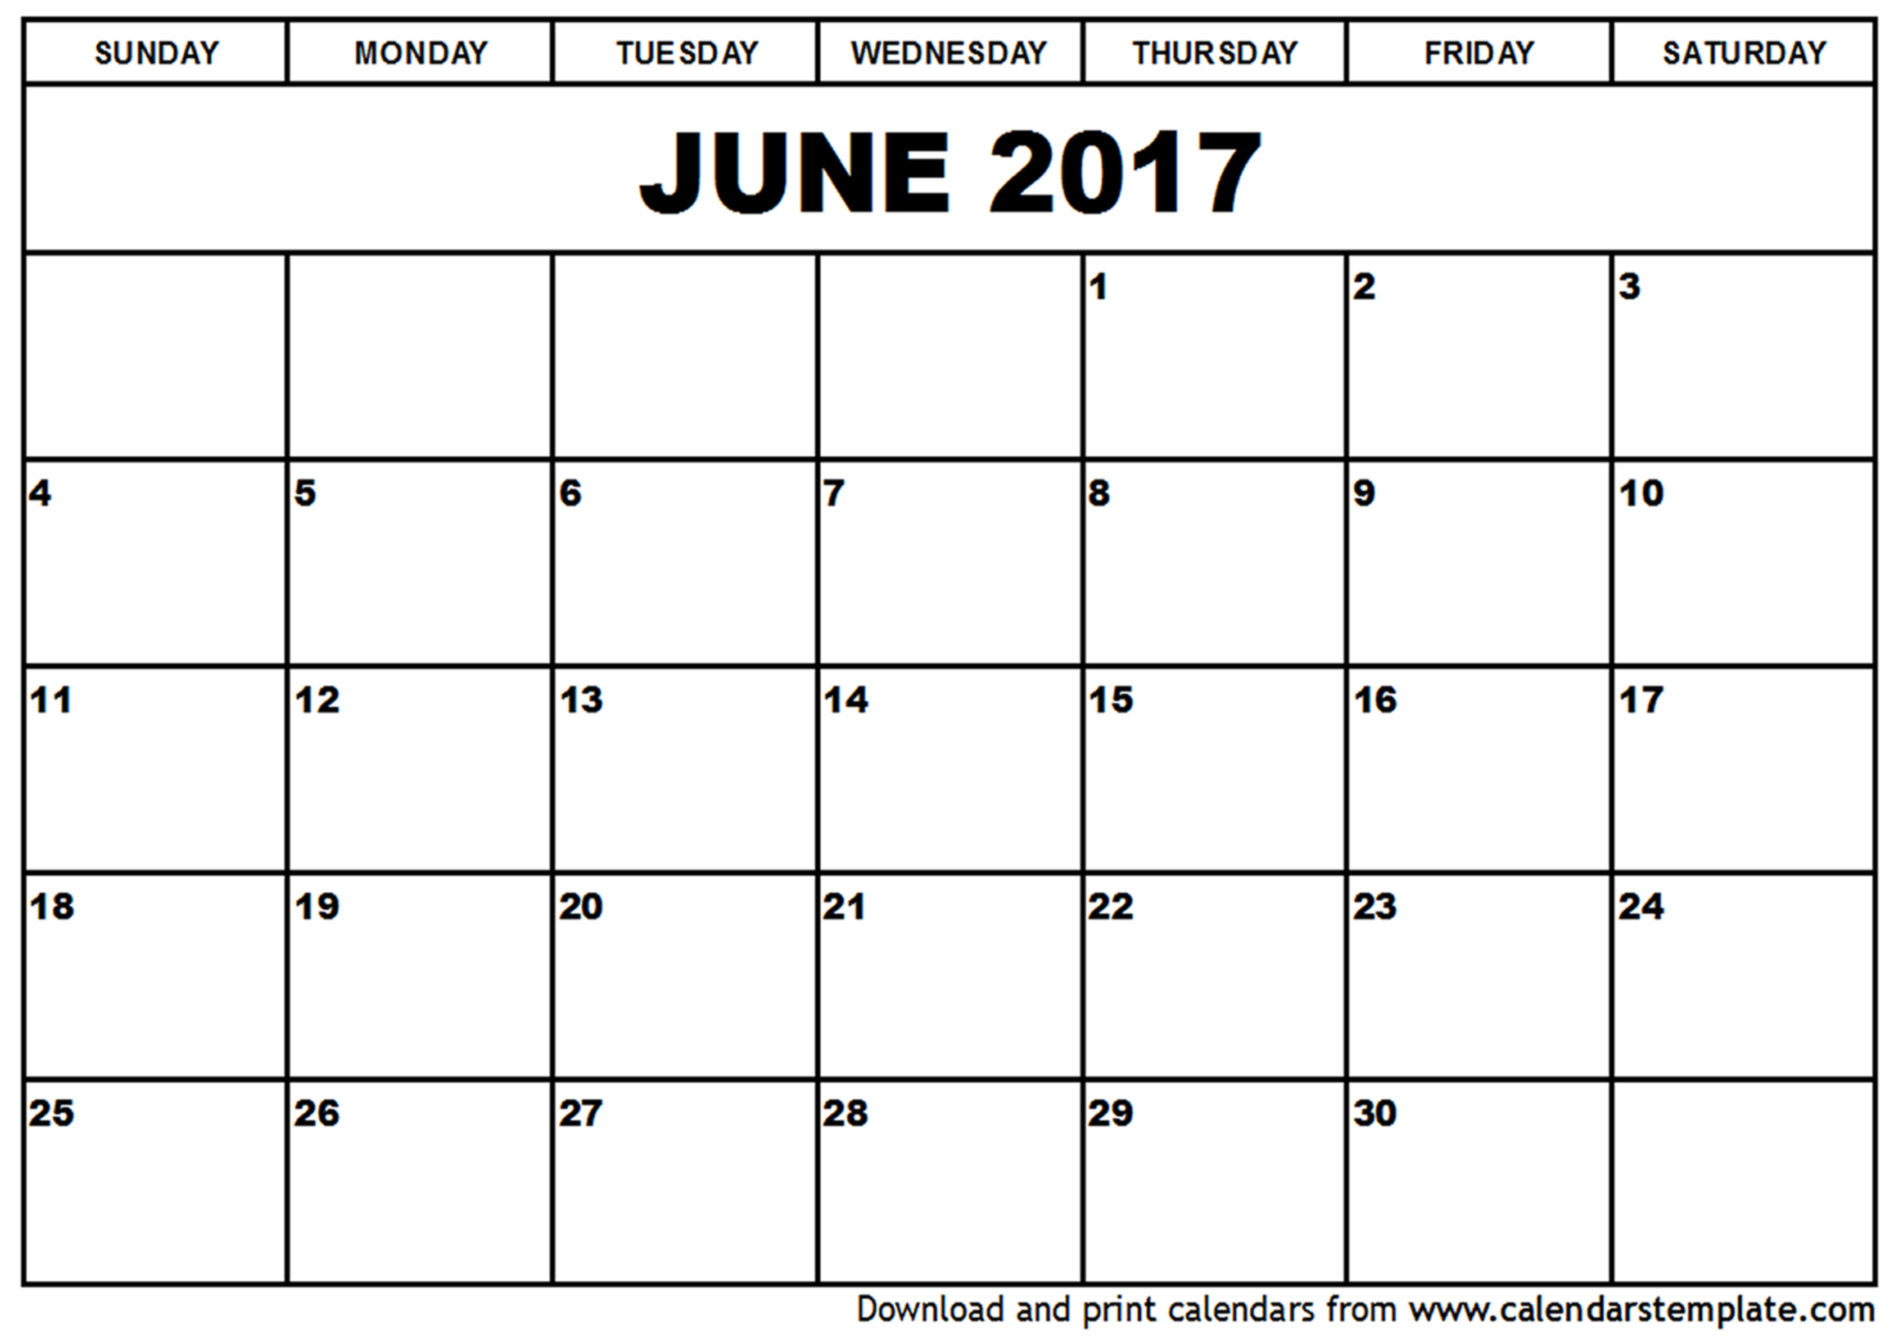 June 2017 Calendar With US Holidays